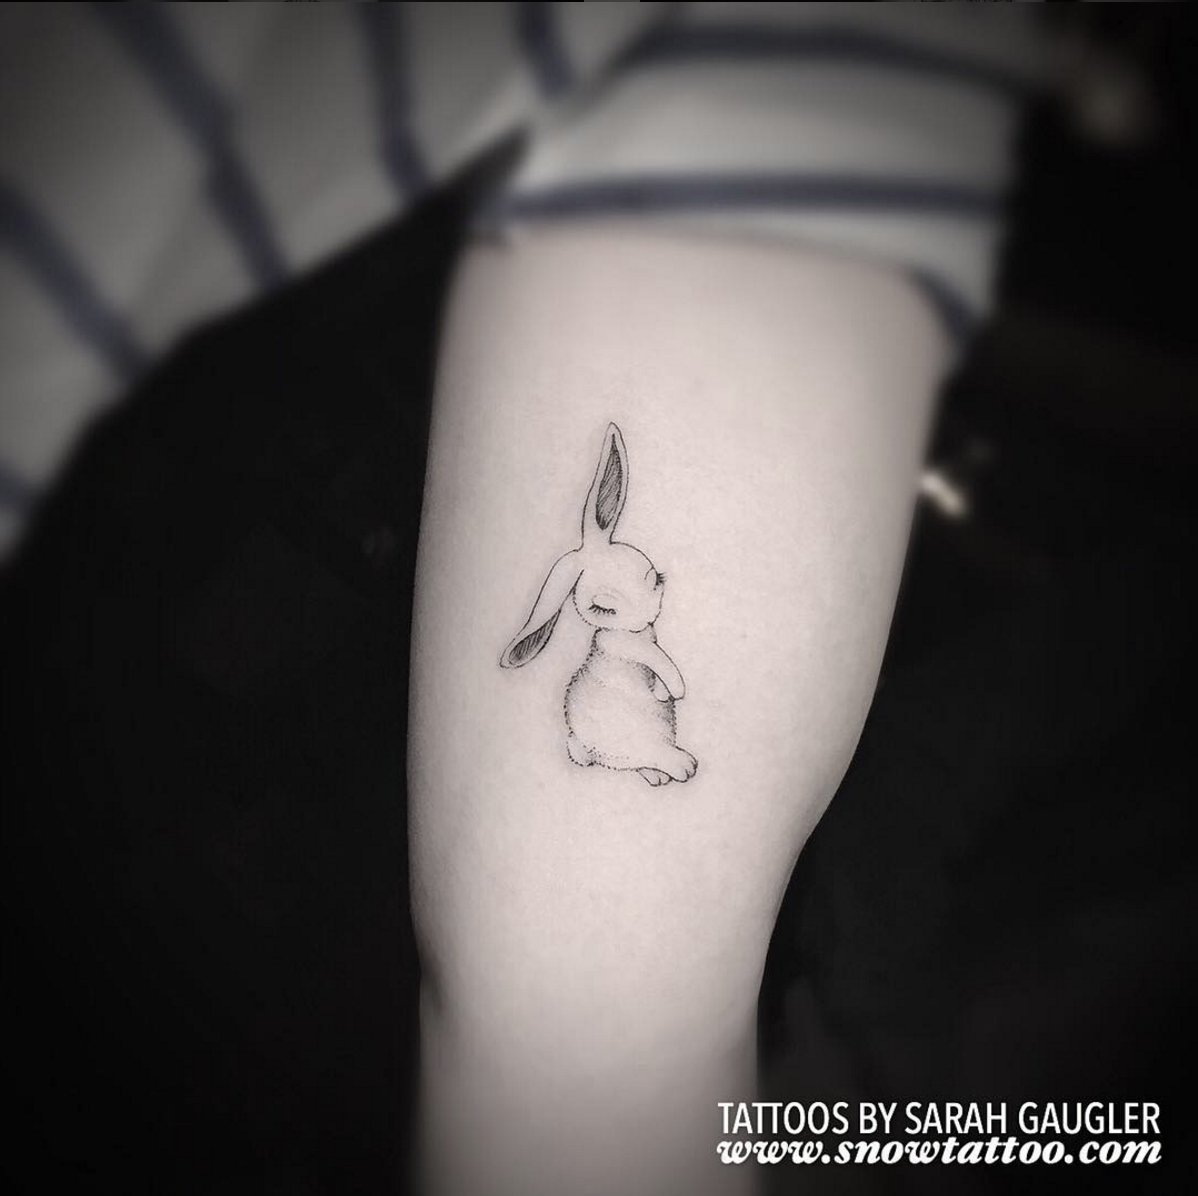 Sarah Gaugler Snow Tattoo Custom Delicate Bunny Fine Line Elegant Intricate FinelineTattoo New York Best Tattoos Best Tattoo Artist NYC.png